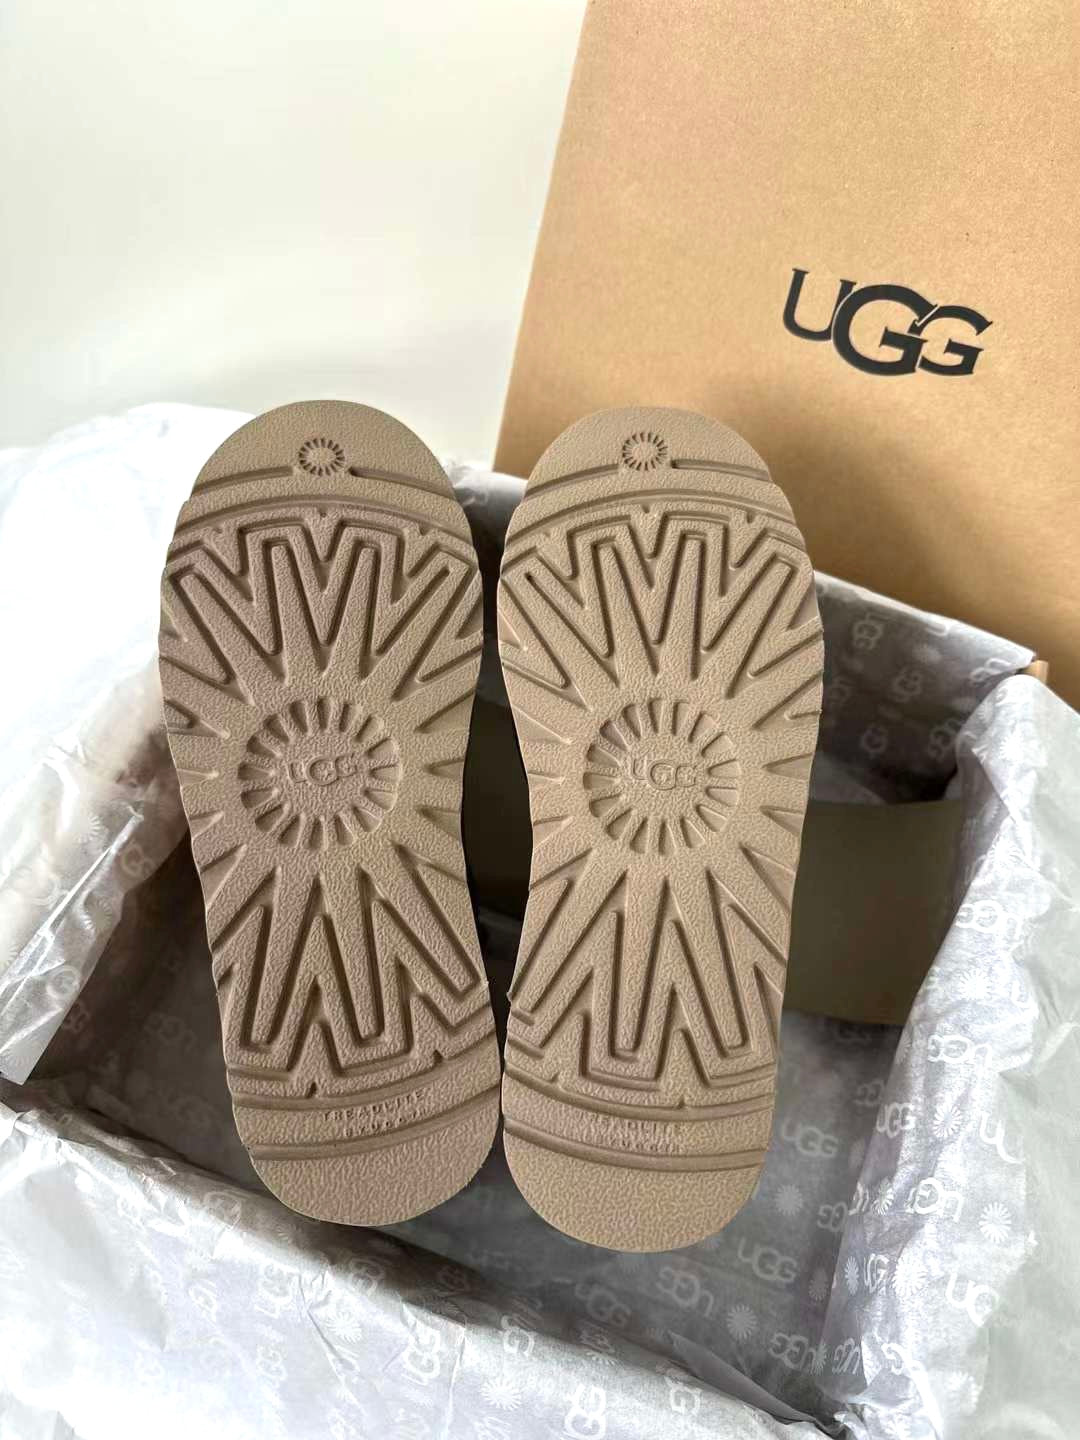 נעלי UGG